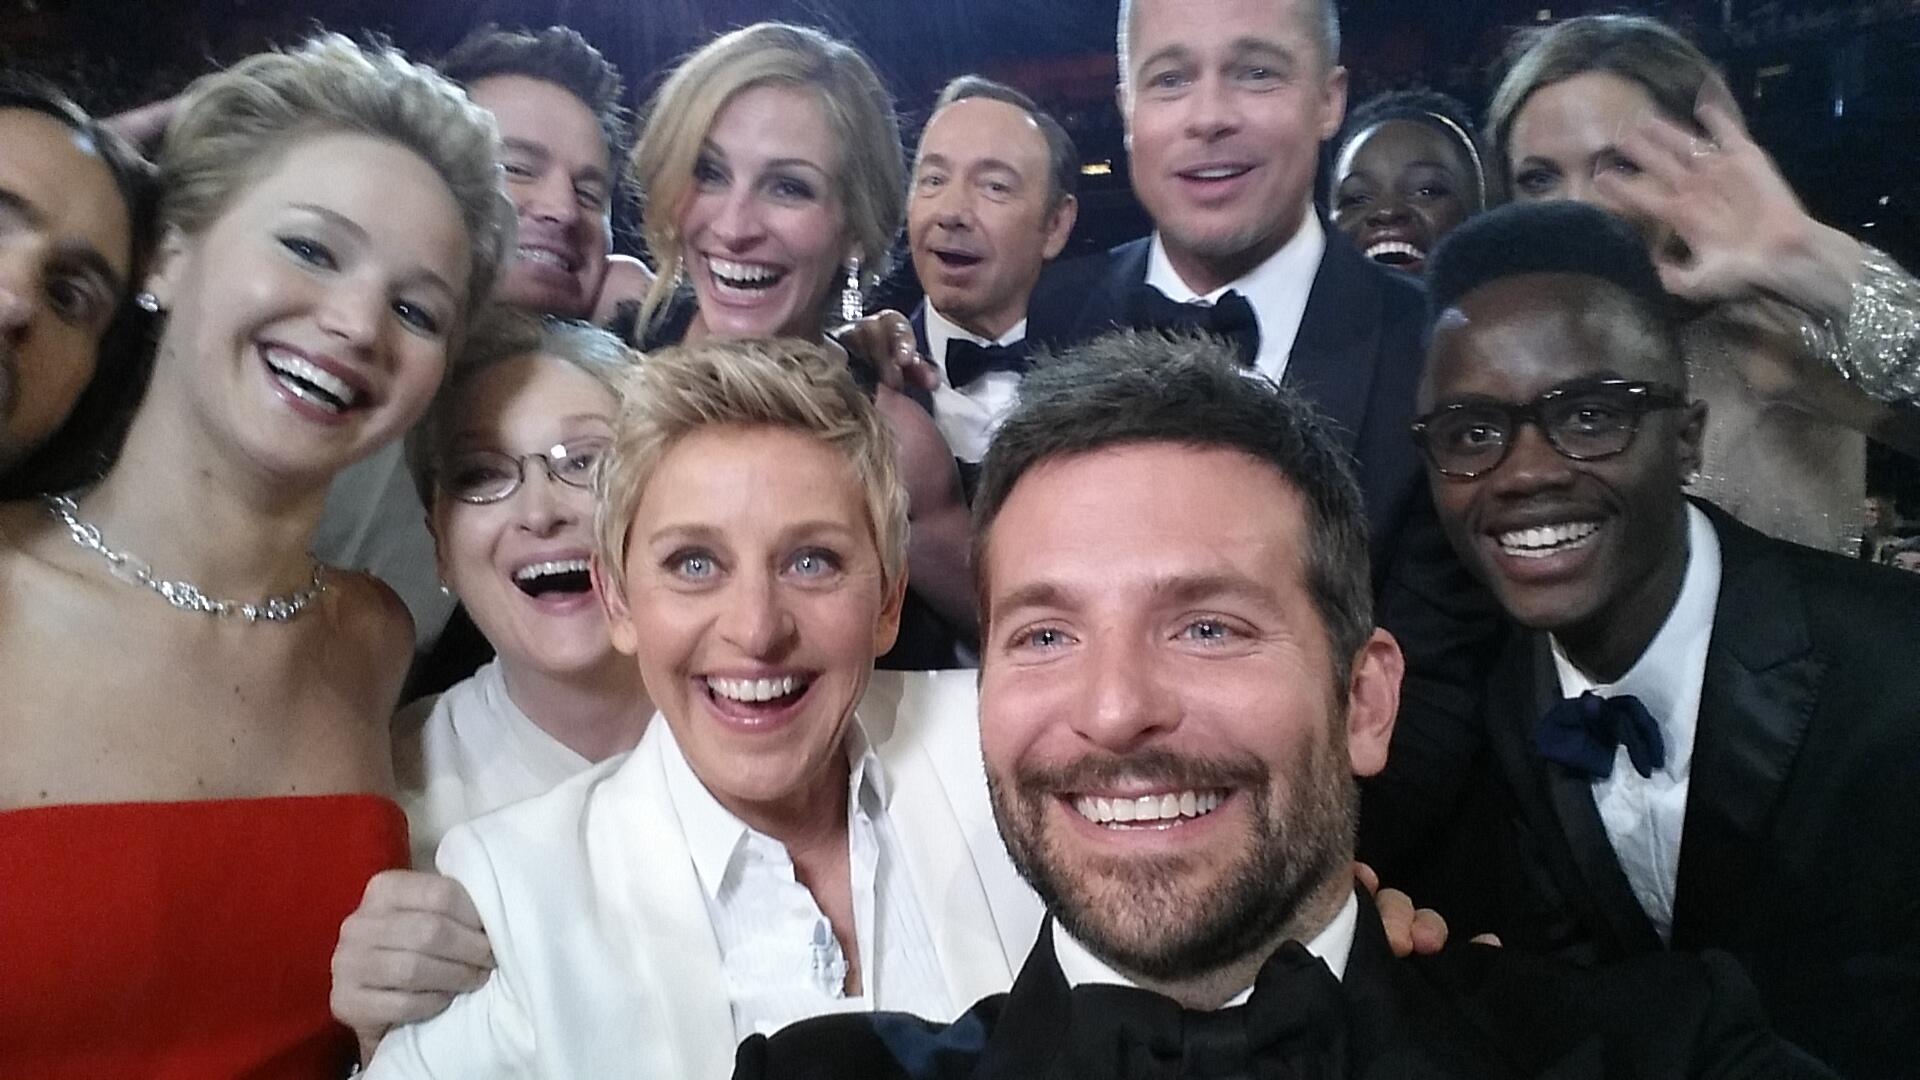 Il famoso selfie delle star agli Oscar 2014. In foto: Bradley Cooper, Angelina Jolie, Lupita Nyong’o, Brad Pitt, Julia Roberts, Kevin Spacey, Jennifer Lawrence, Meryl Streep e Jared Leto